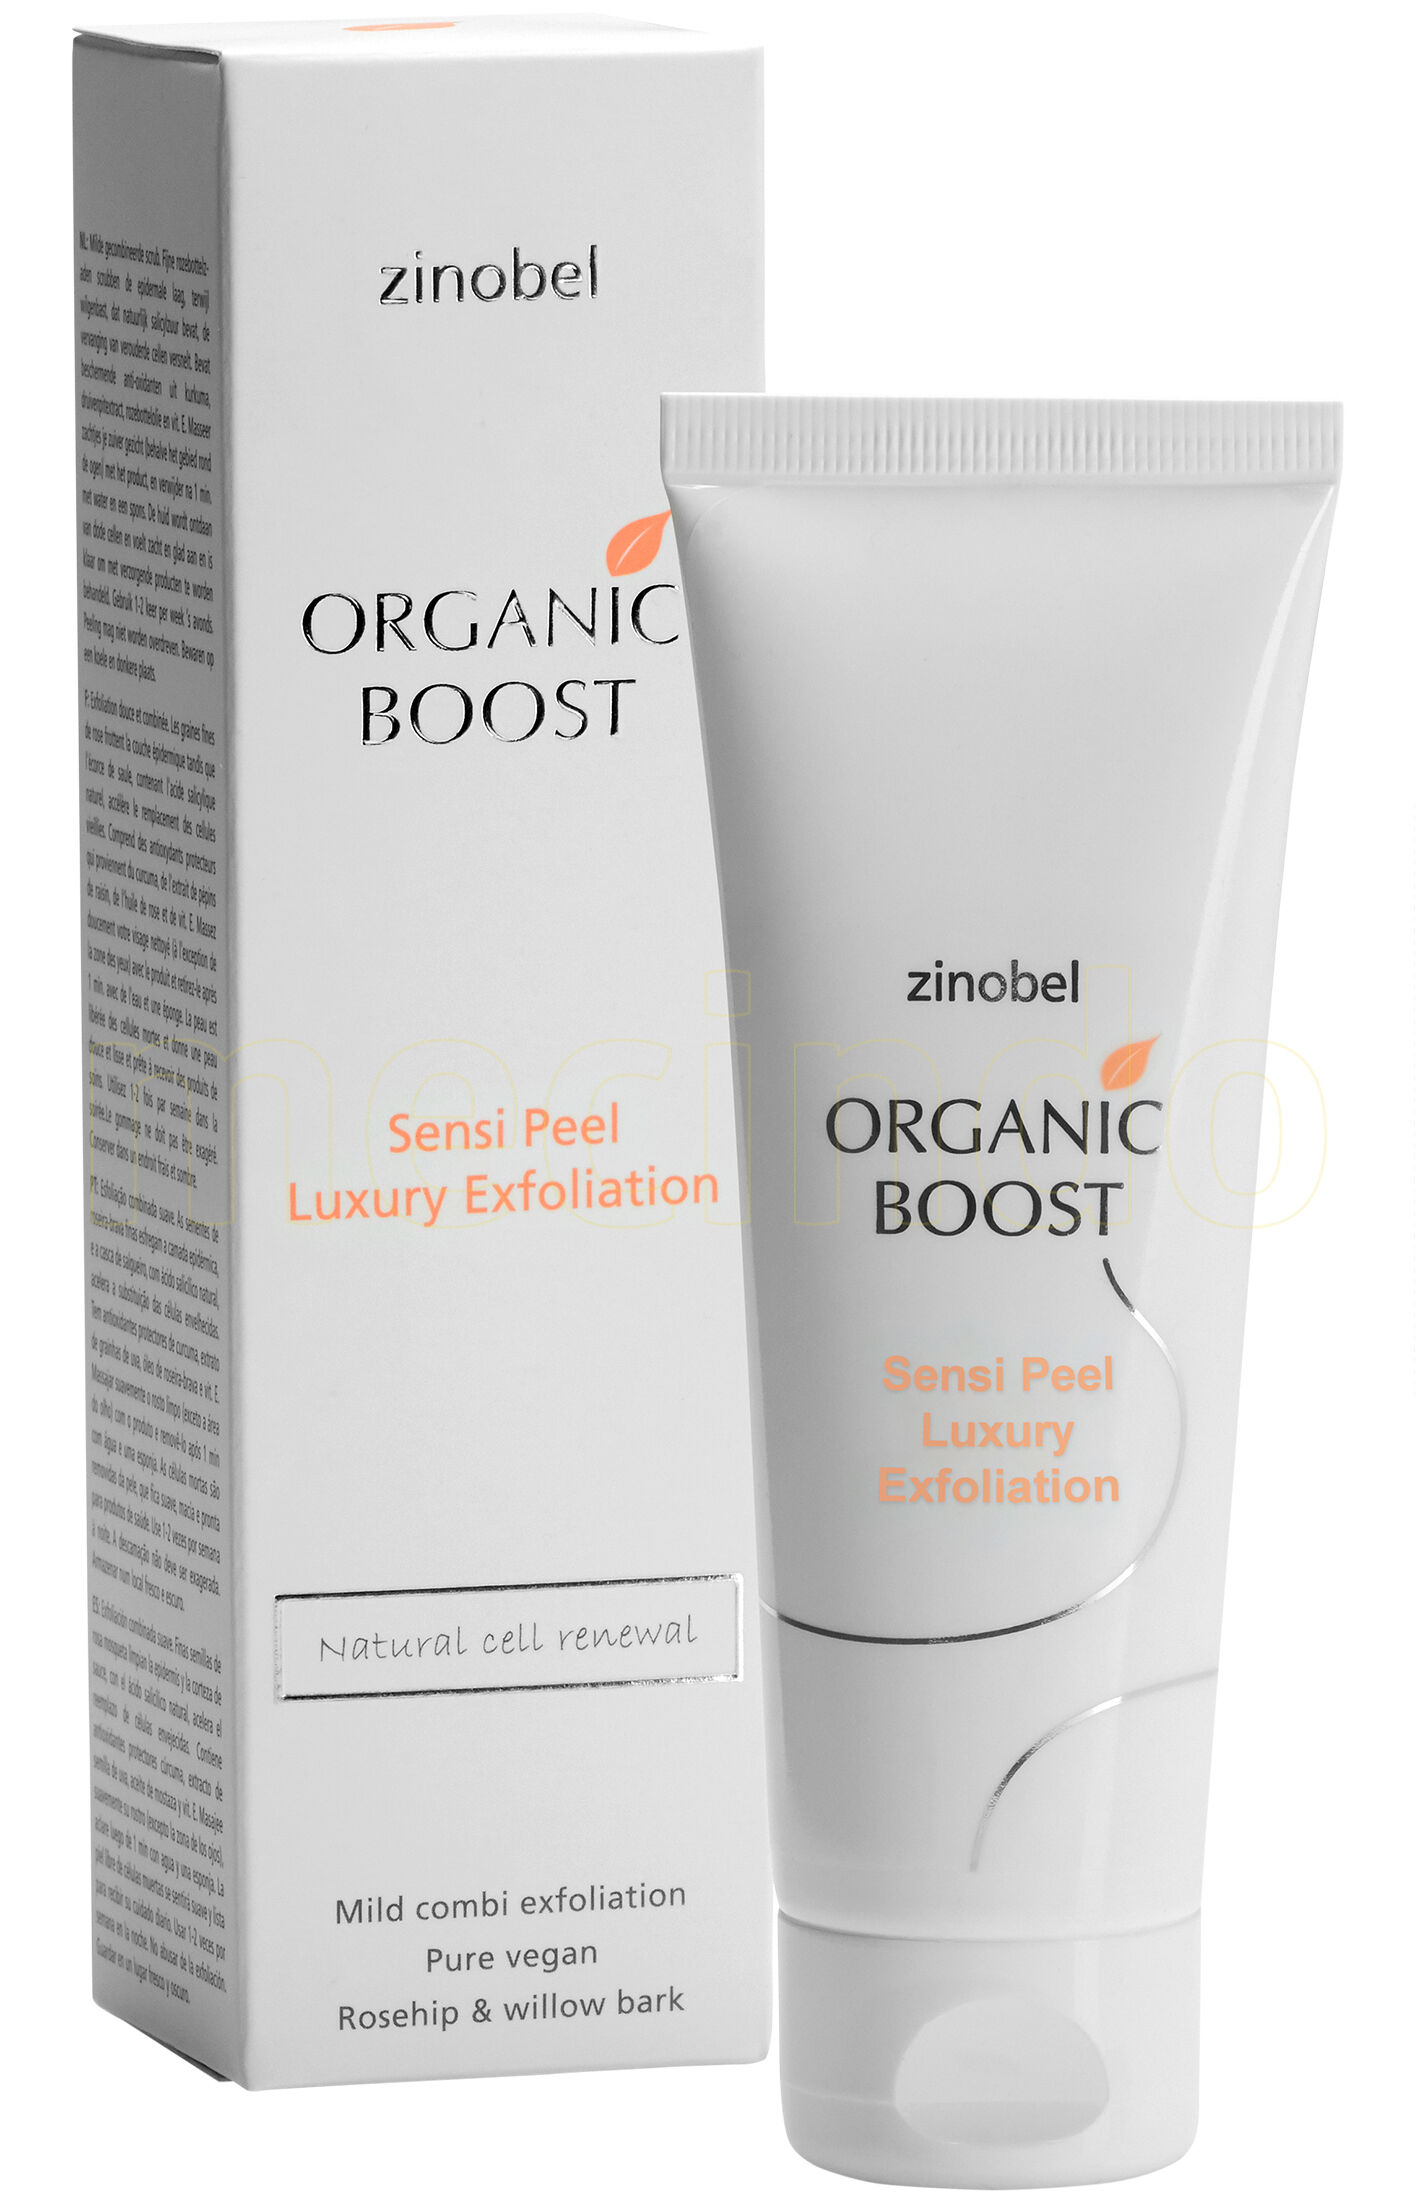 Zinobel Organic Boost Sensi Peel Luxury Exfoliation - 75 ml